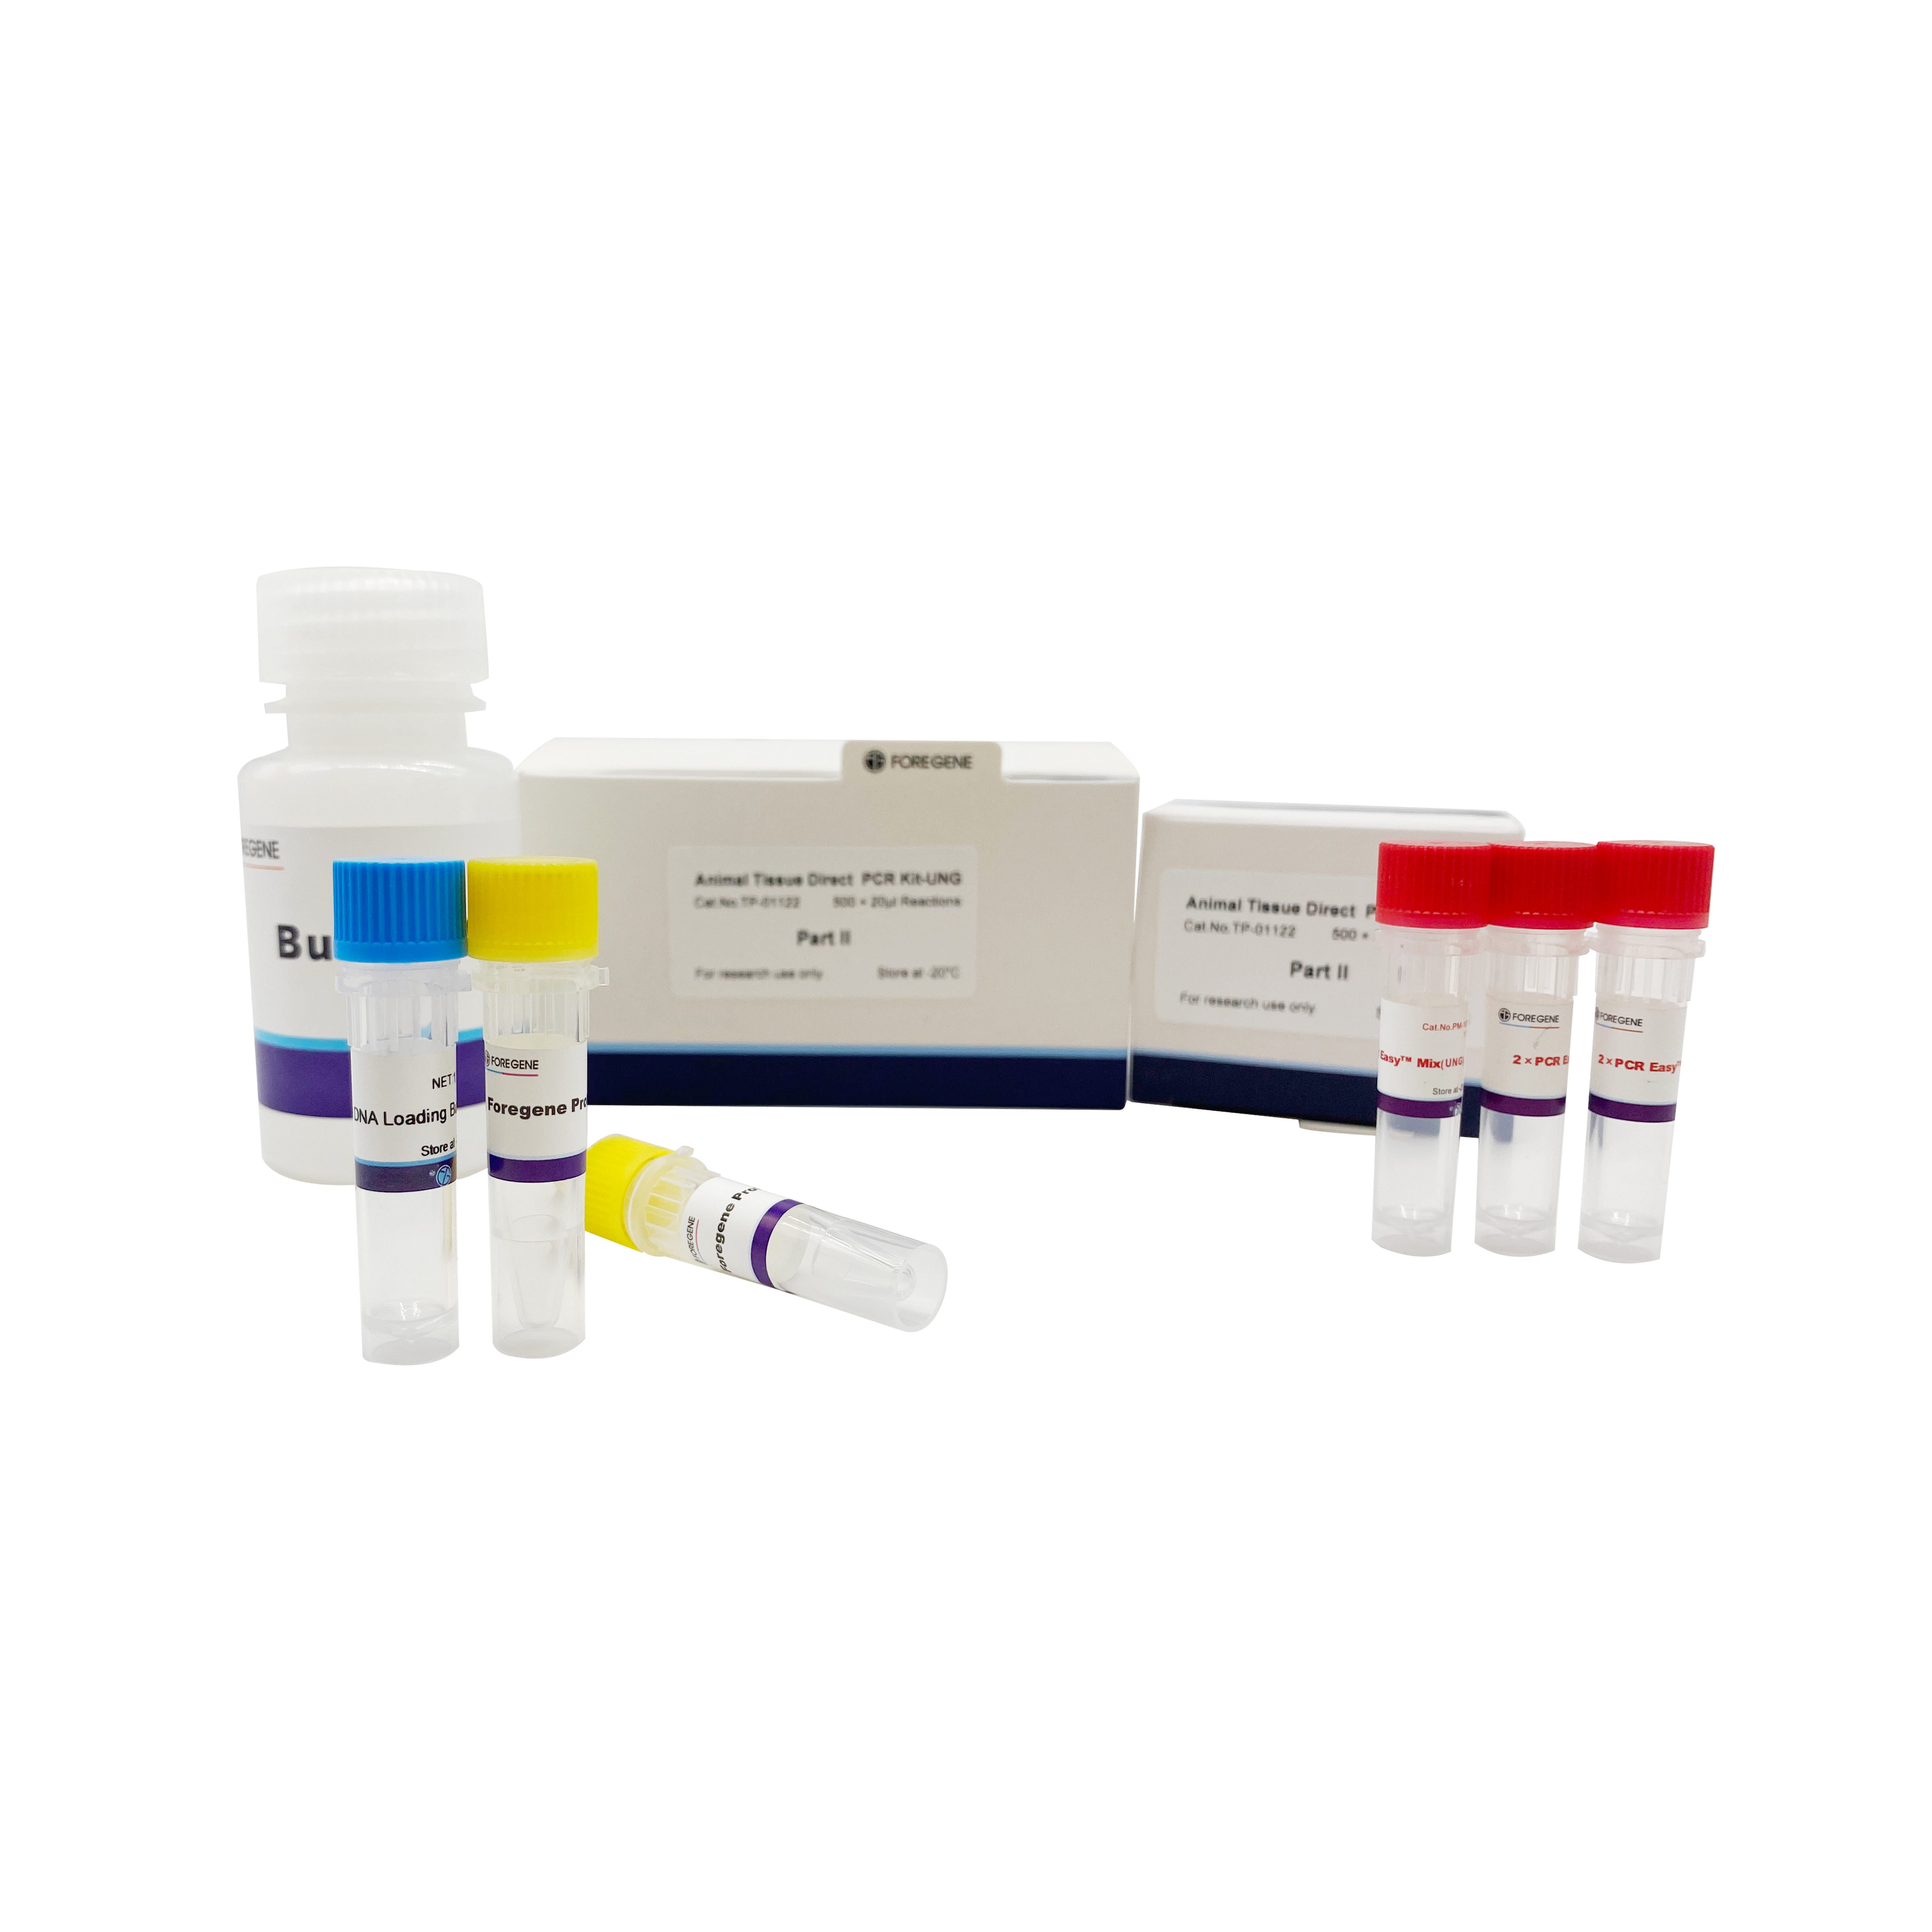 Animal Tissue Direct PCR Kit-UNG (Sonder DNA-ekstraksie)